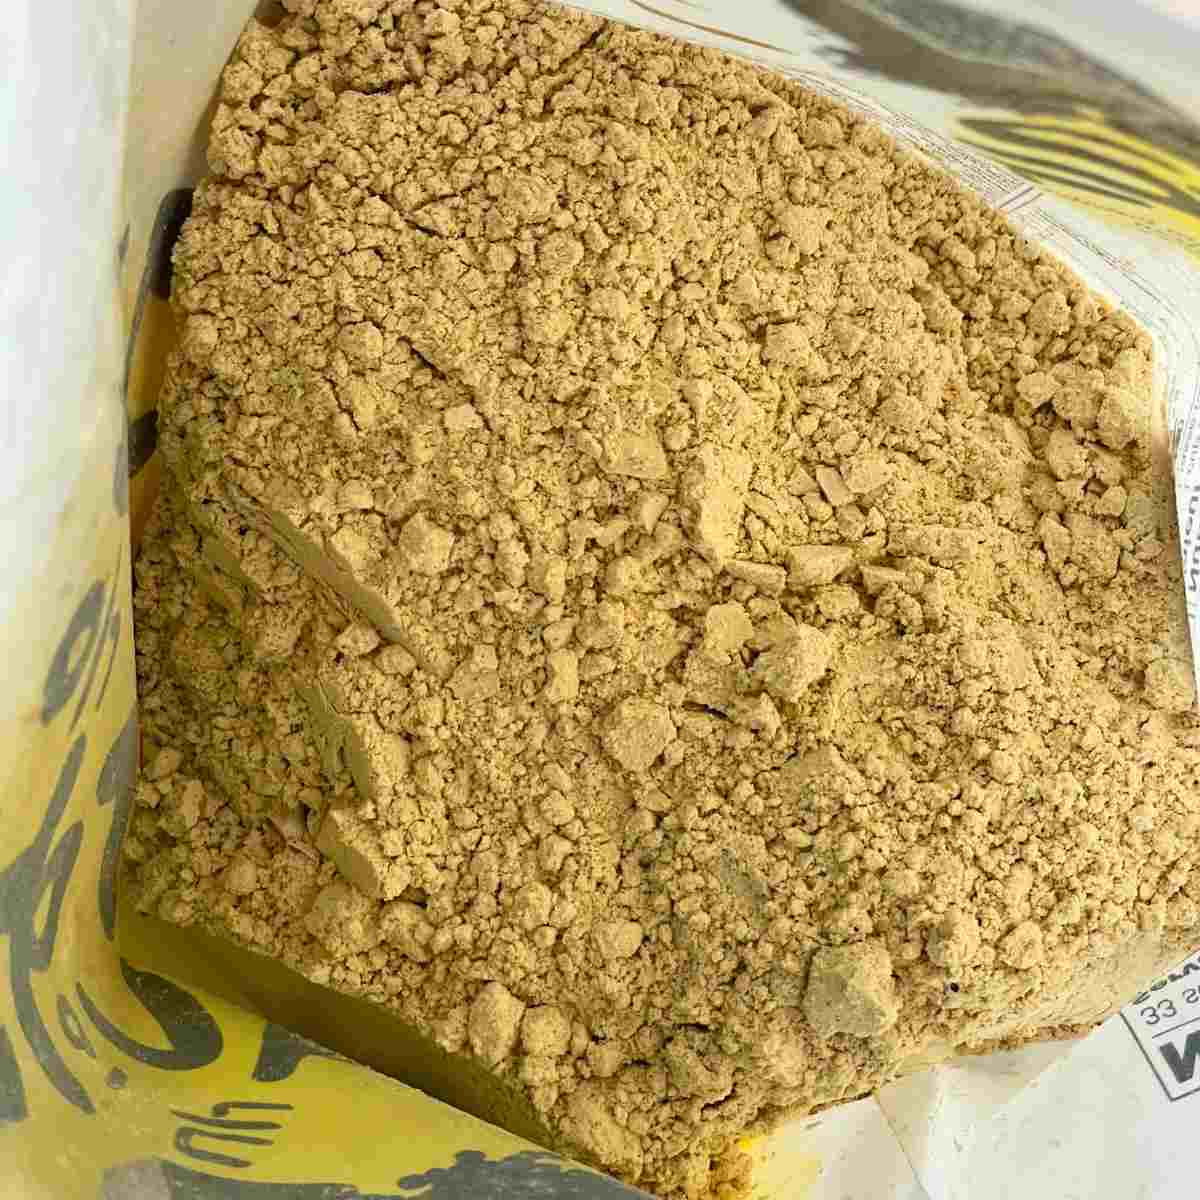 Pure misugaru powder inside the packet